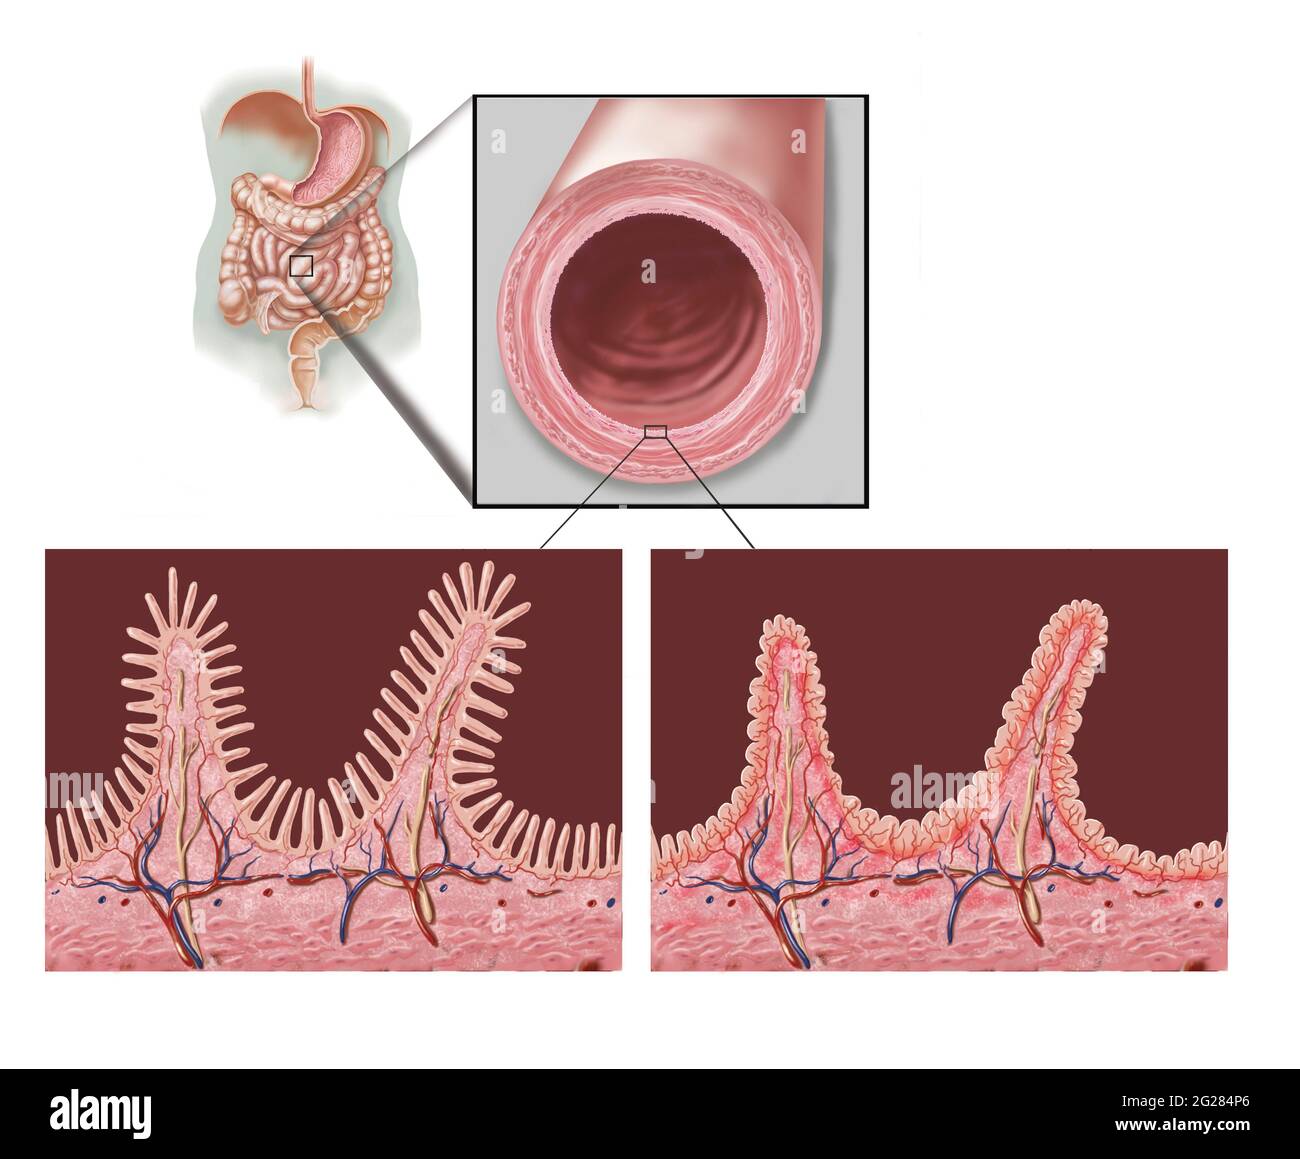 Cross section of intestine showing destruction of villi due to celiac disease. Stock Photo